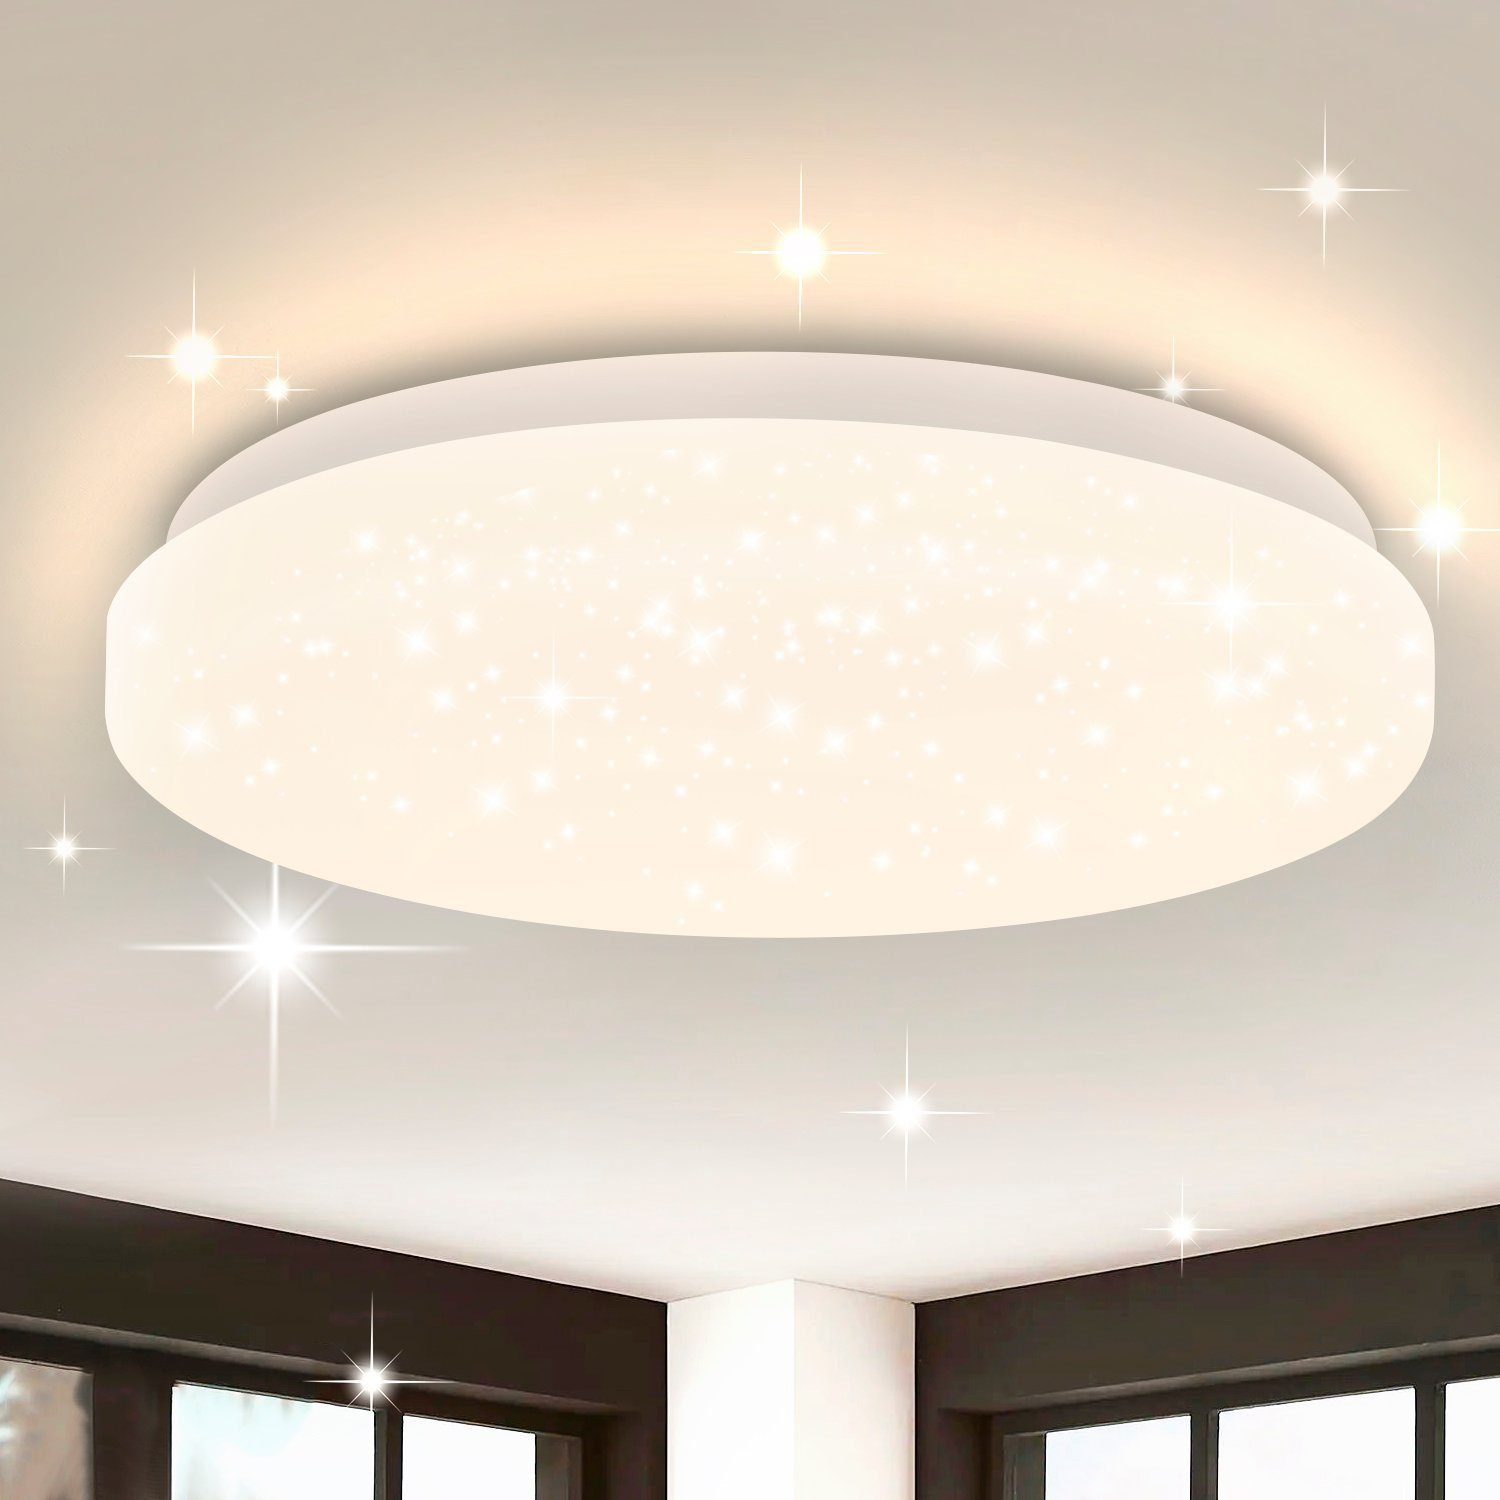 ZMH LED Deckenleuchte Sternenhimmel klein flach Schlafzimmerlampe Modern, LED fest integriert, 3000K